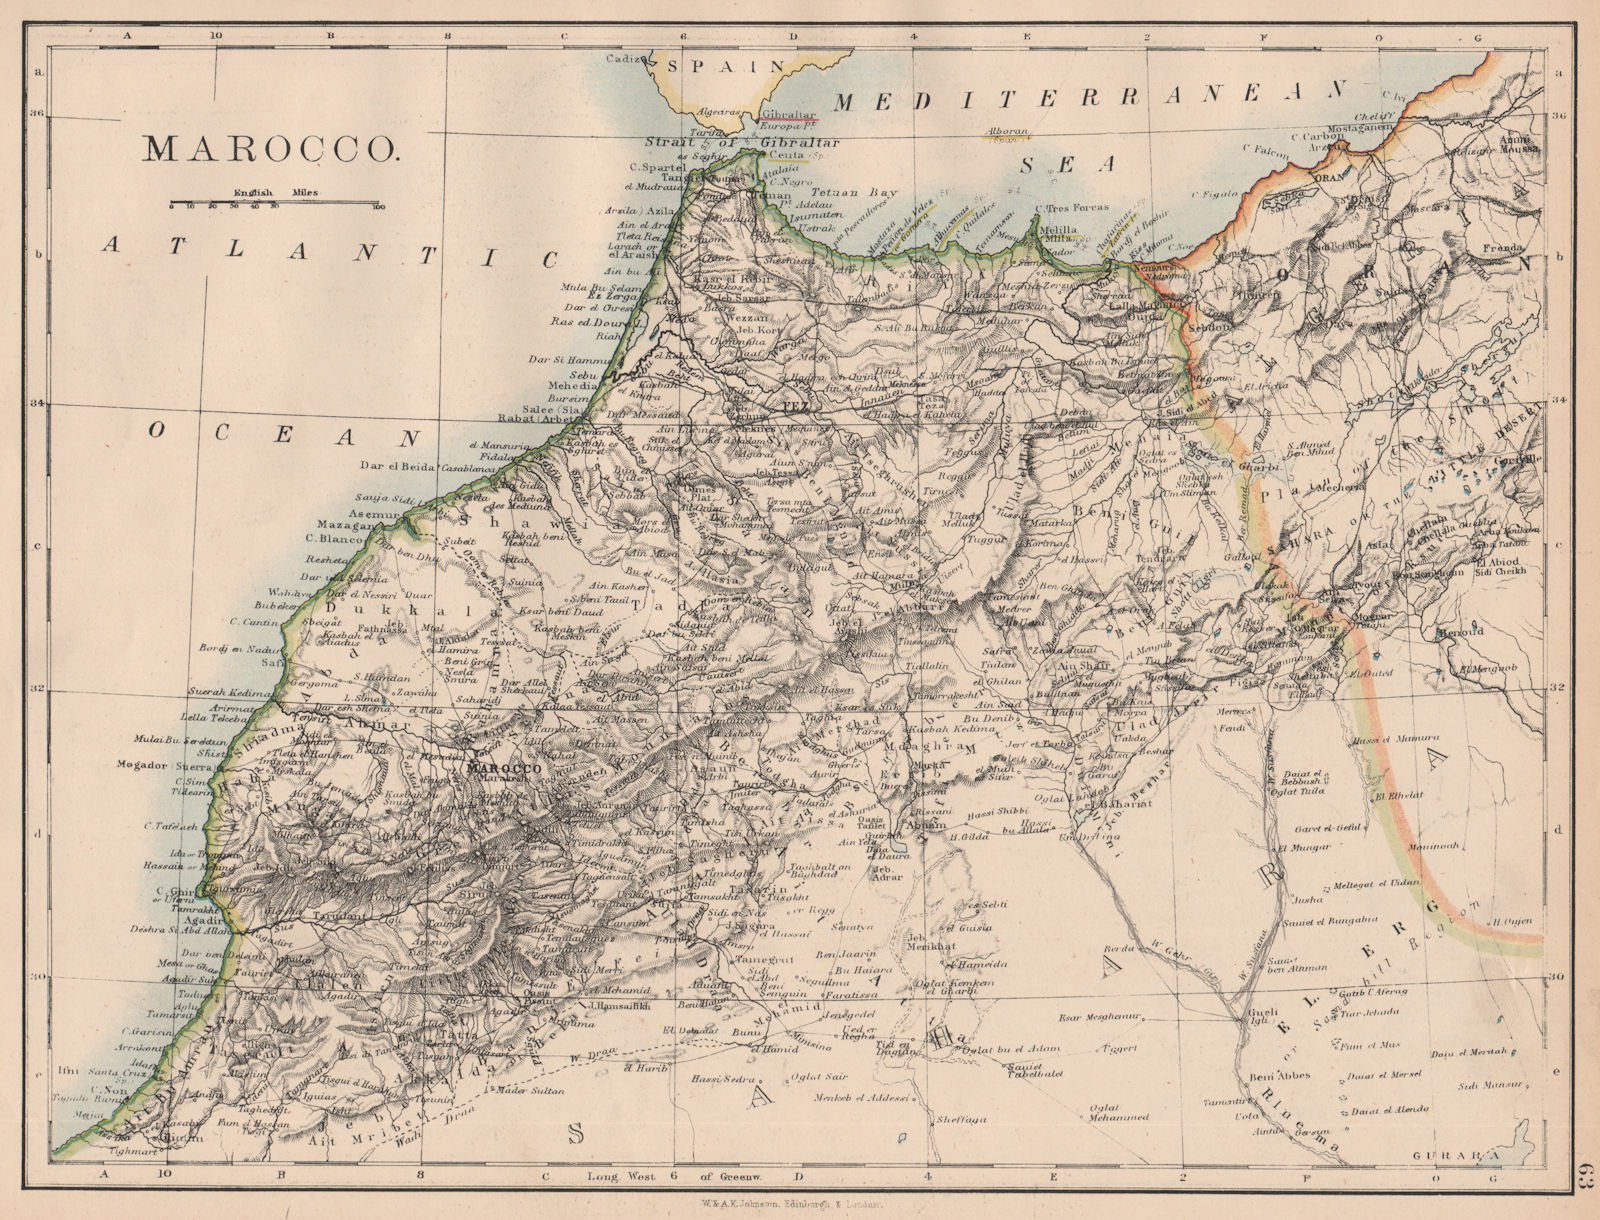 MOROCCO. Showing Atlas mountains rivers towns. Marrakech. JOHNSTON 1897 map